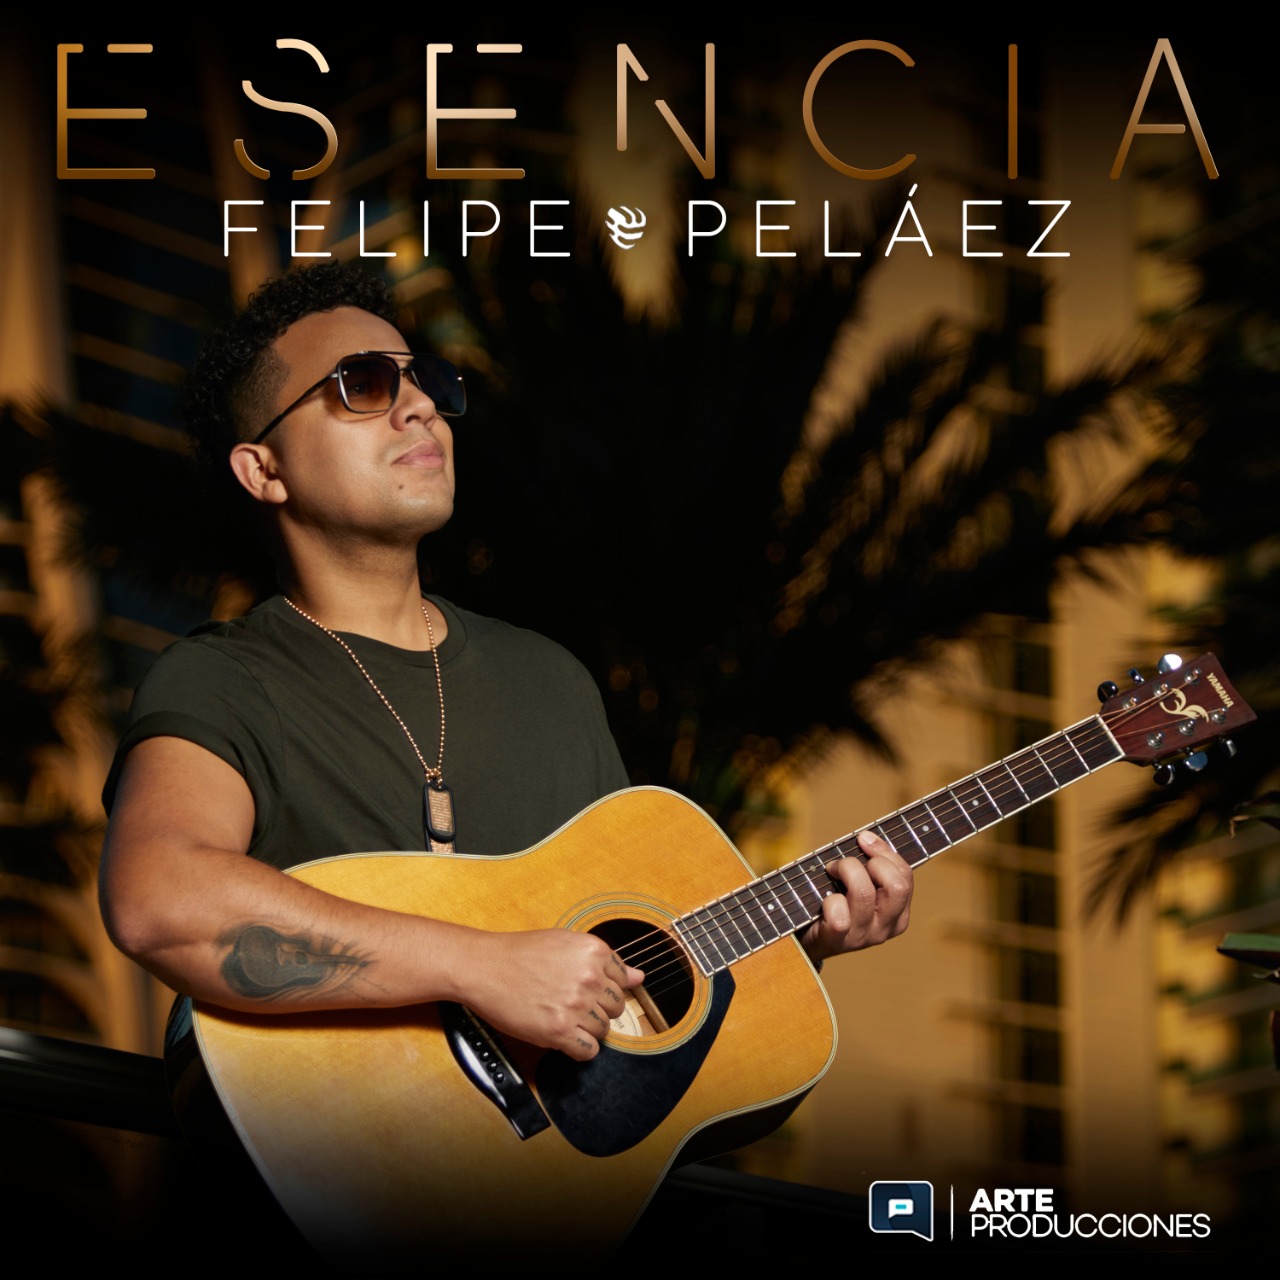 ¡Felipe Peláez sorprende con ‘esencia’, su nuevo álbum! – @FelipePelaez